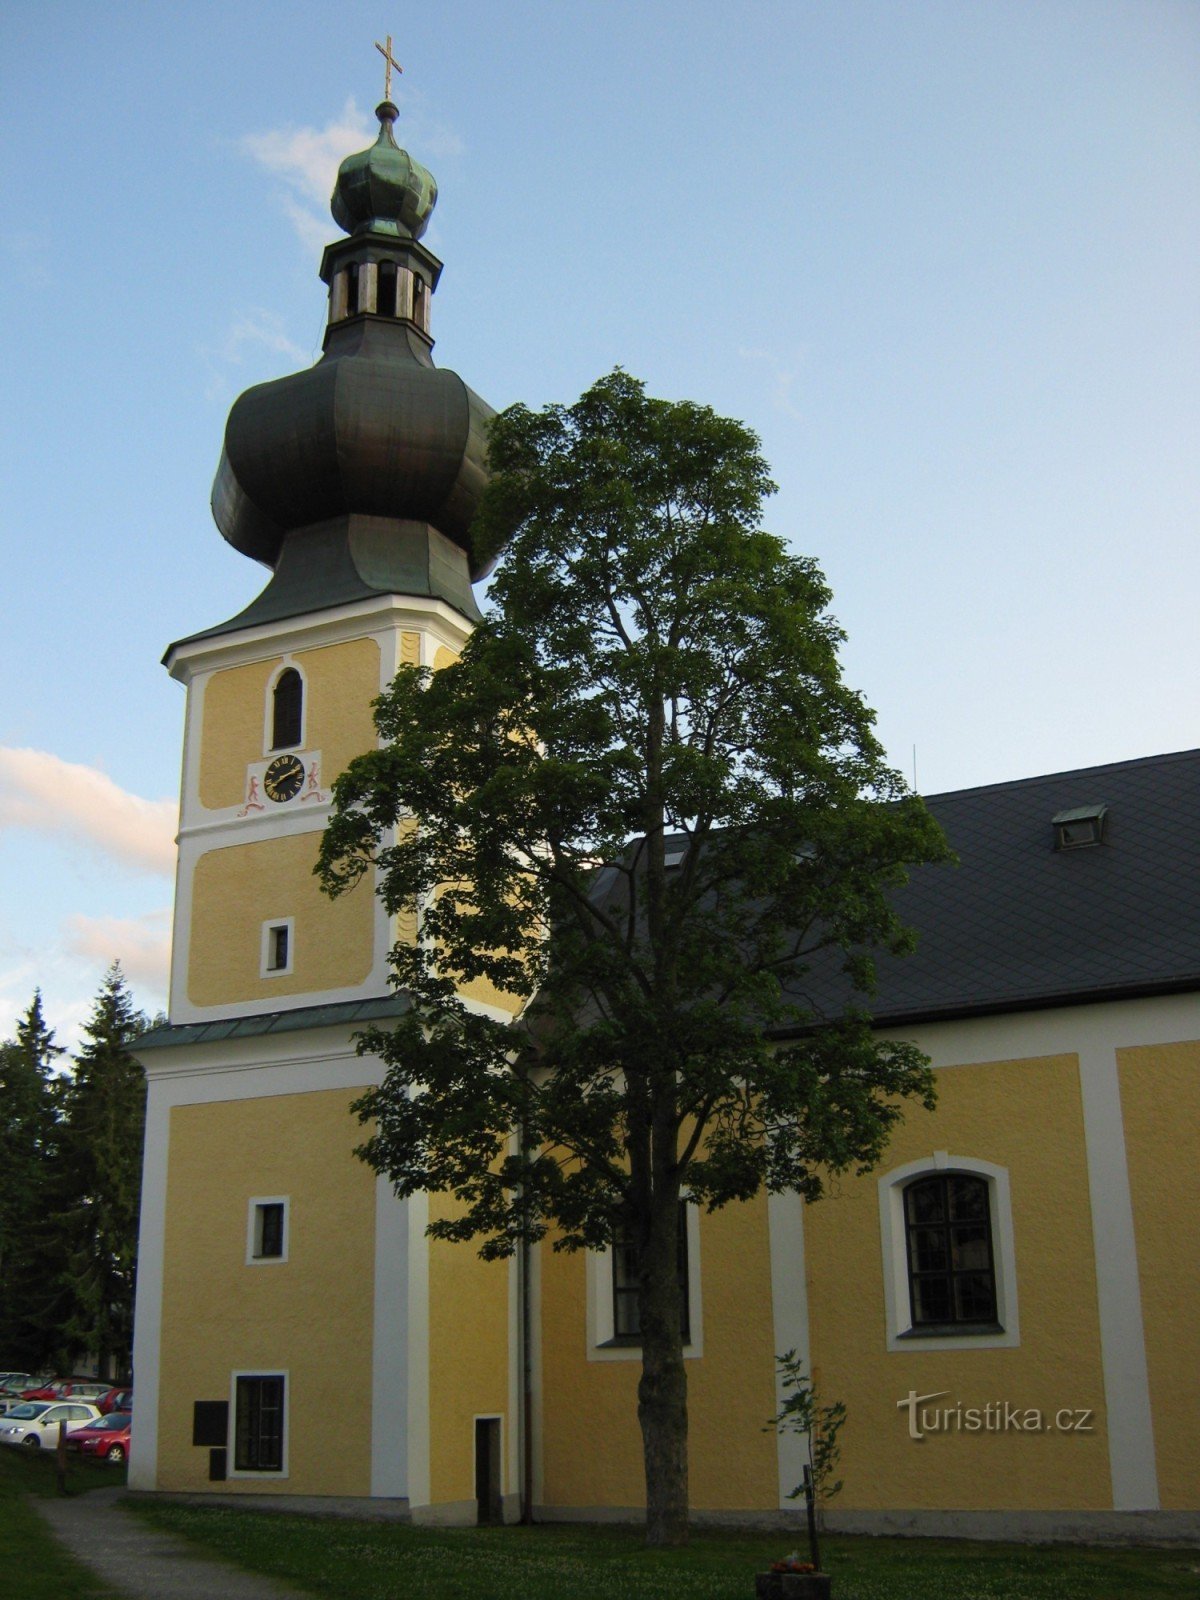 Srni - Church of St. Treenighed